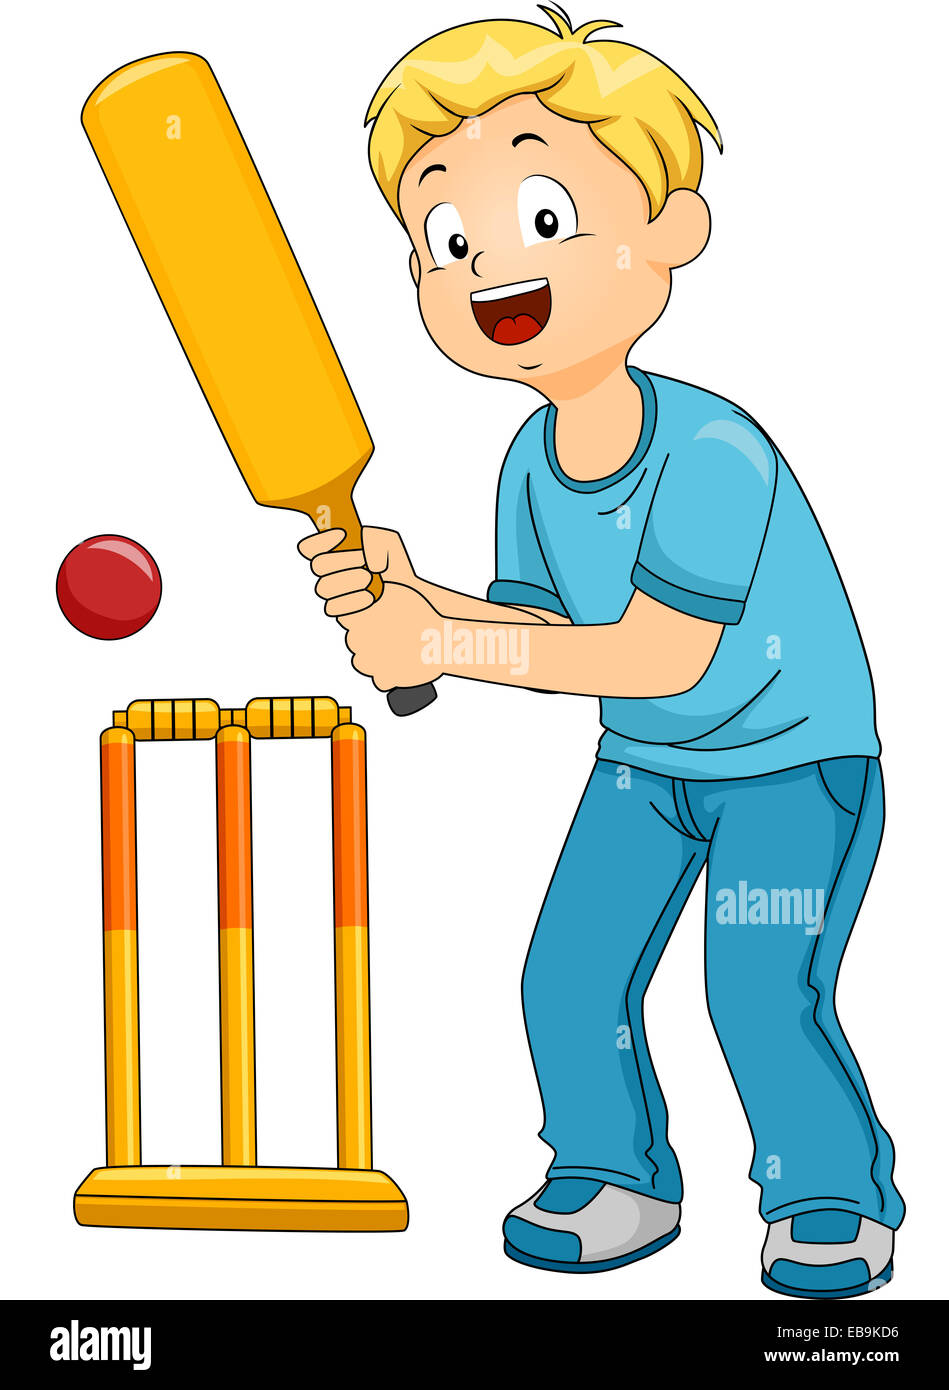 Illustration of a Boy Playing Cricket Stock Photo - Alamy